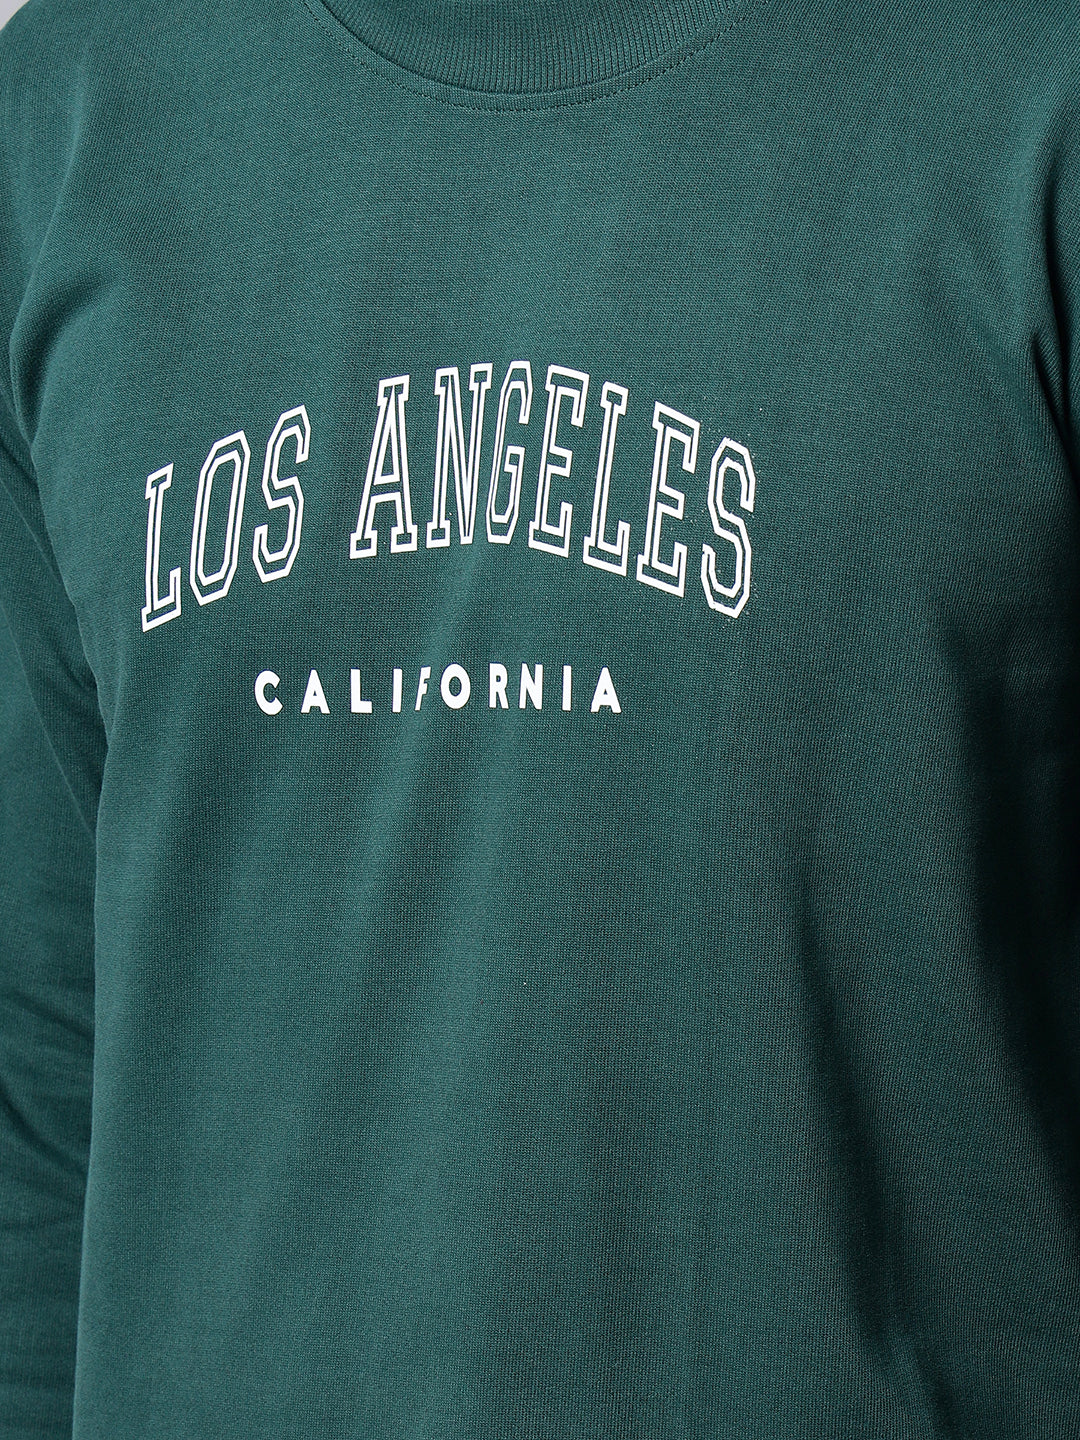 Los Angeles Dark Green Sweatshirt